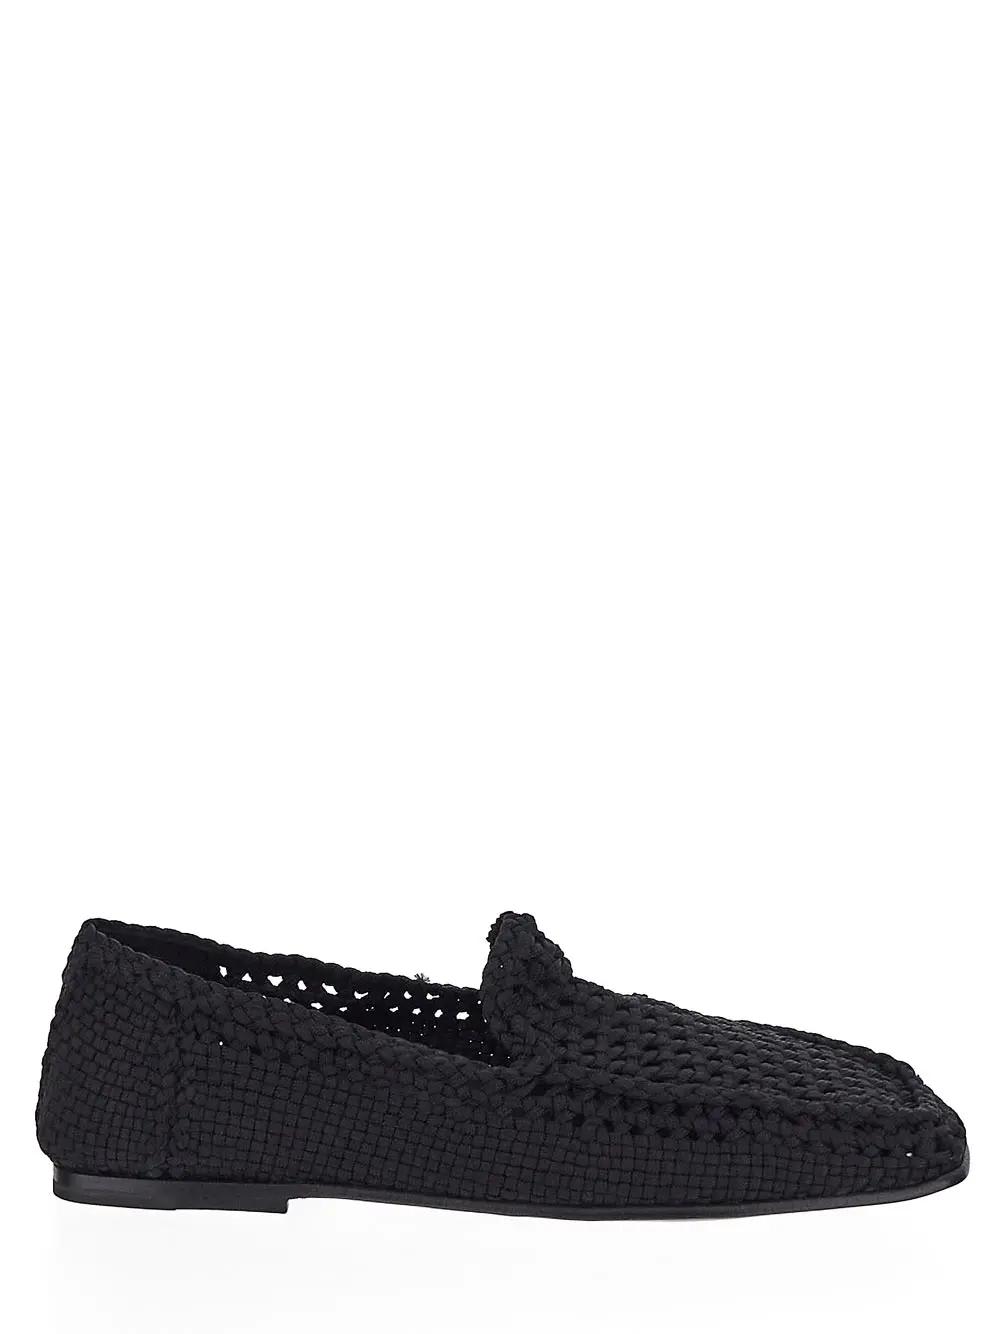 Dolce & Gabbana Crochet Slippers In Black